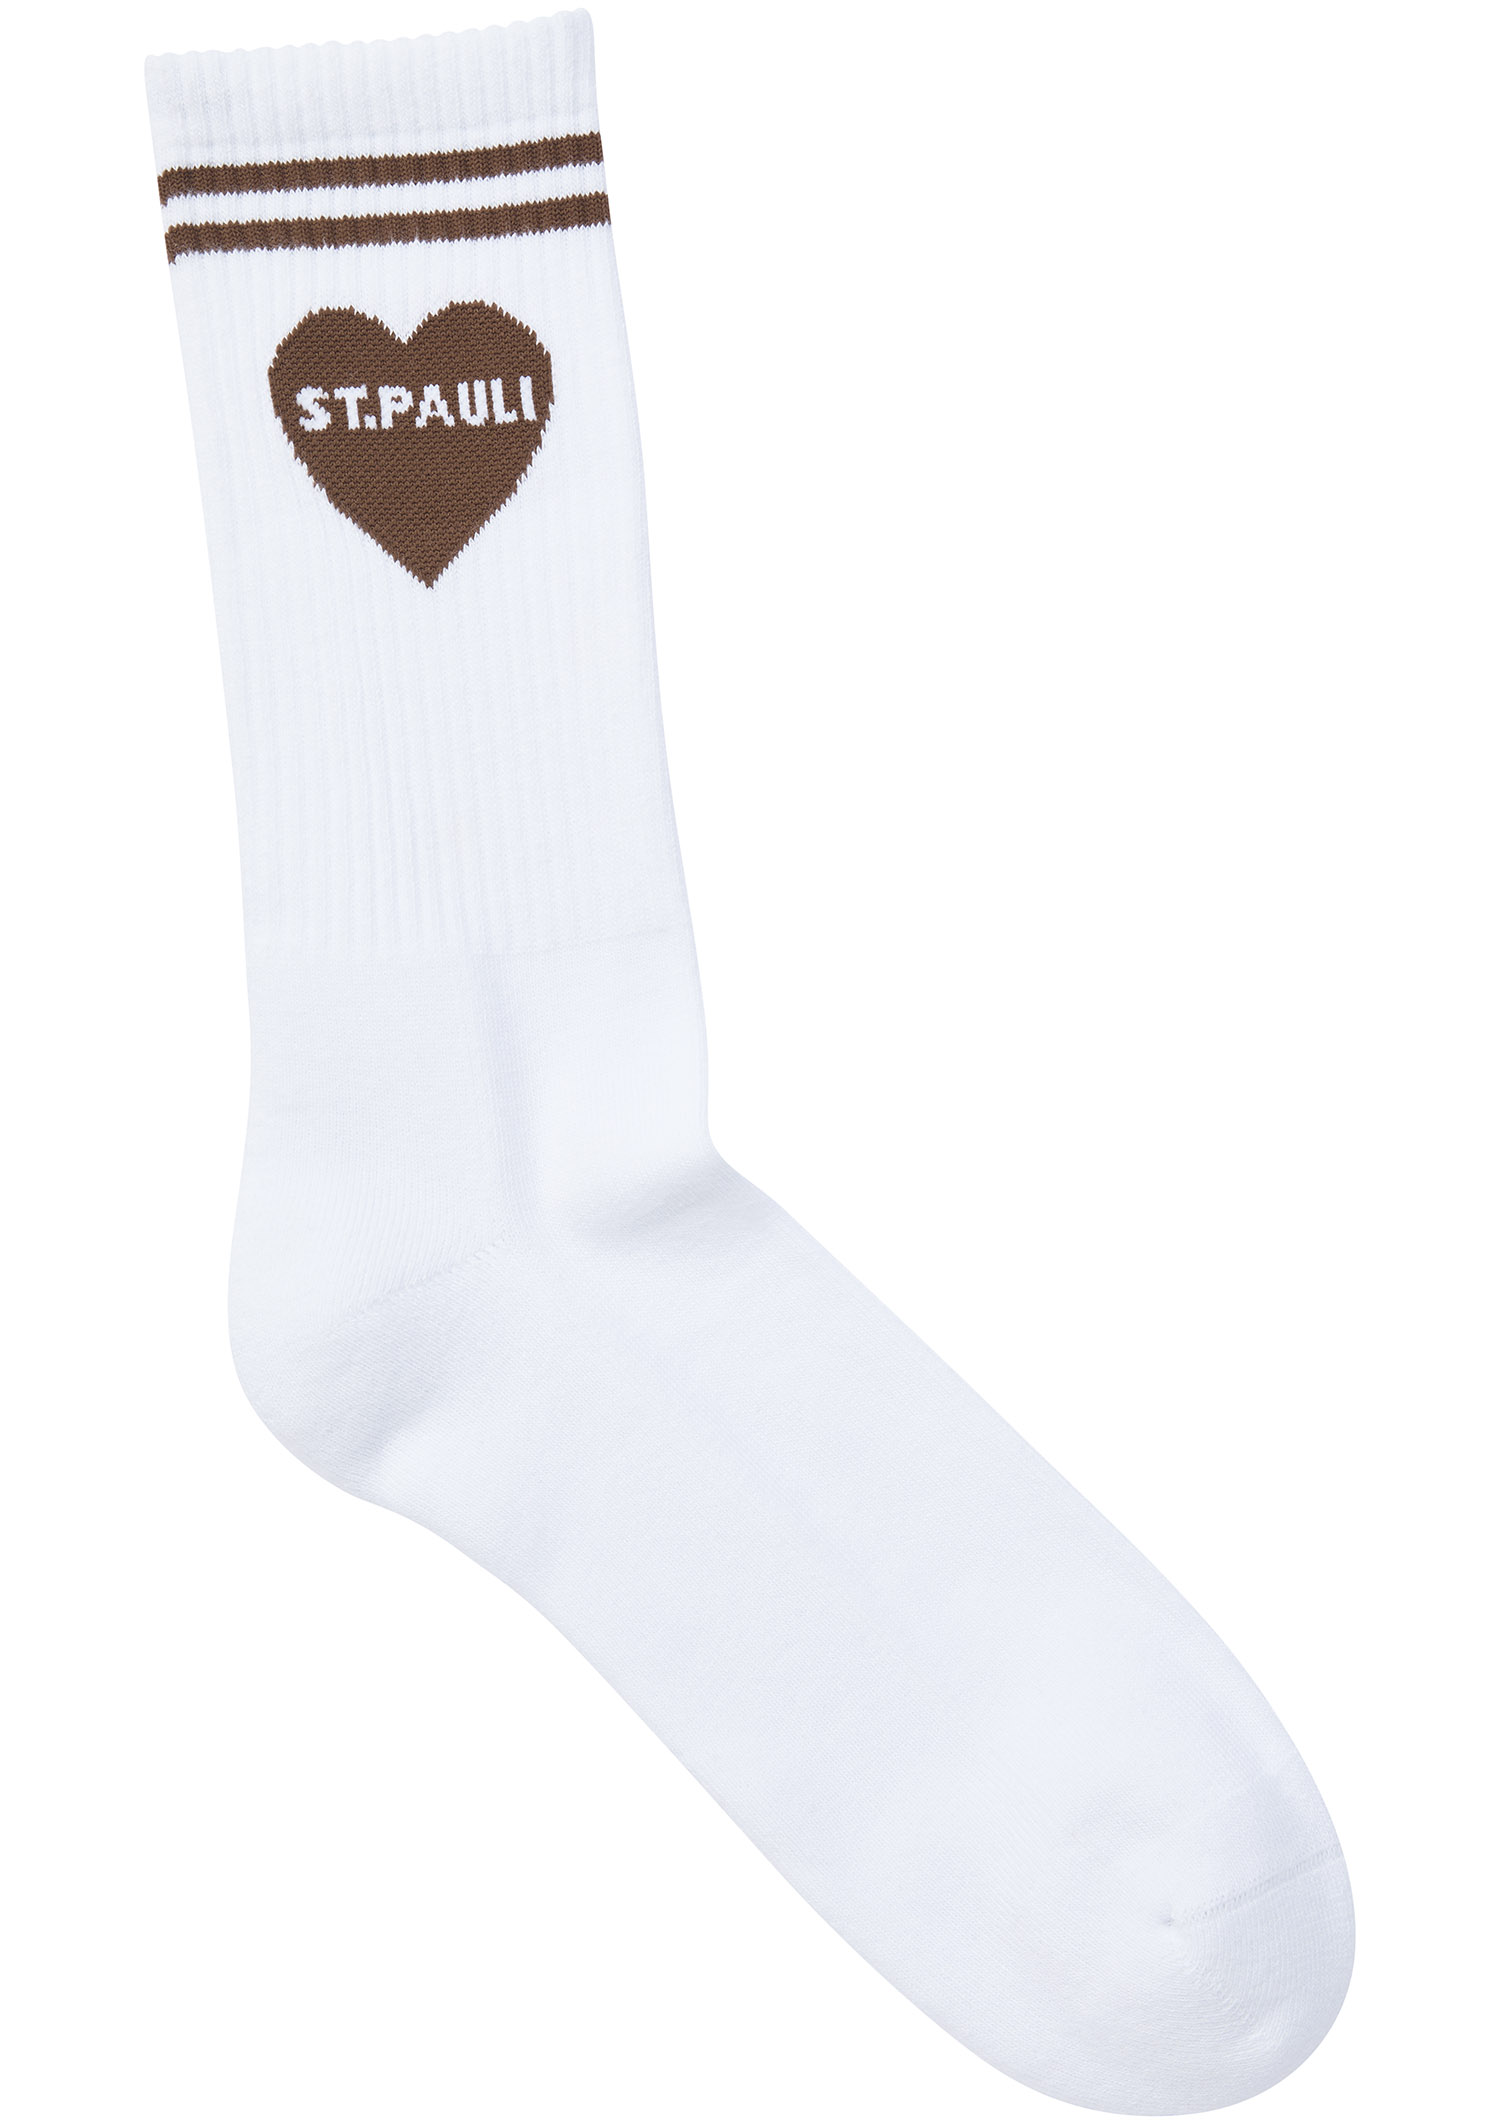 Socken "St. Pauli Herz" - braun